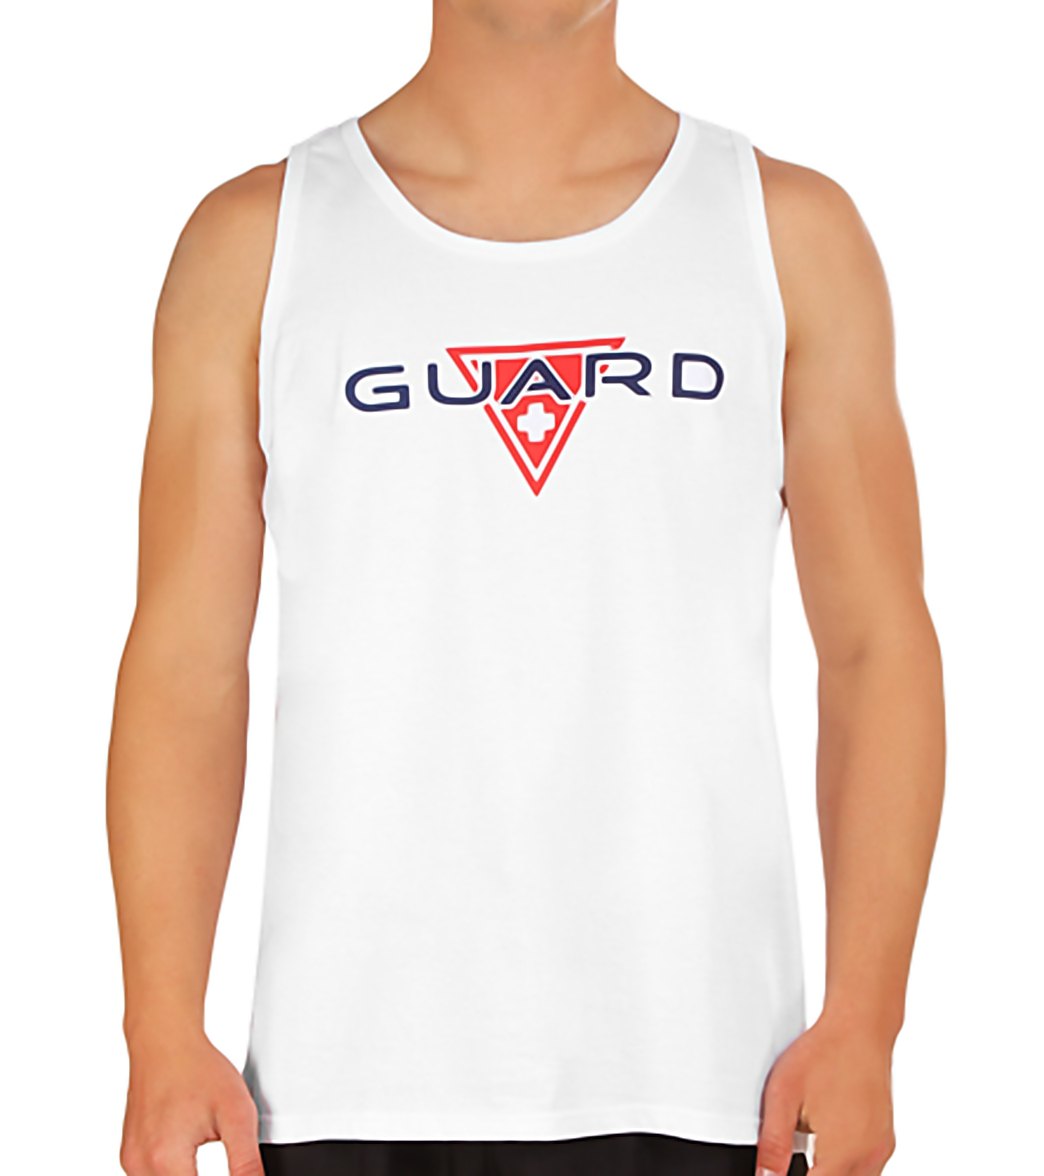 The Finals Guard Male Tank Top Shirt - White Small Cotton - Swimoutlet.com